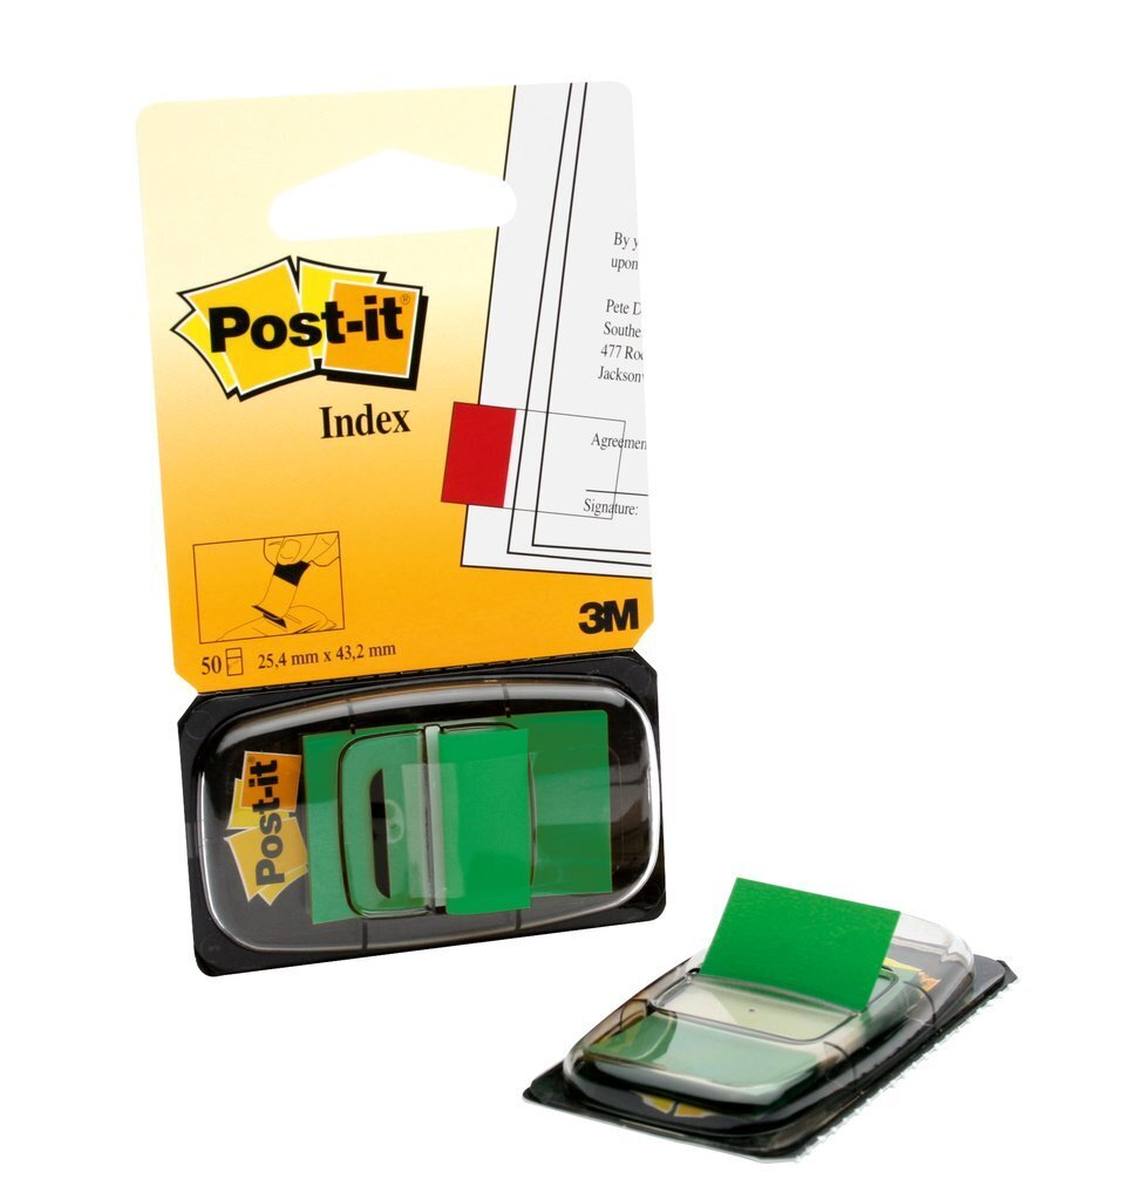 3M Post-it Index I680-3, 25,4 mm x 43,2 mm, vert, 1 x 50 bandes adhésives en distributeur